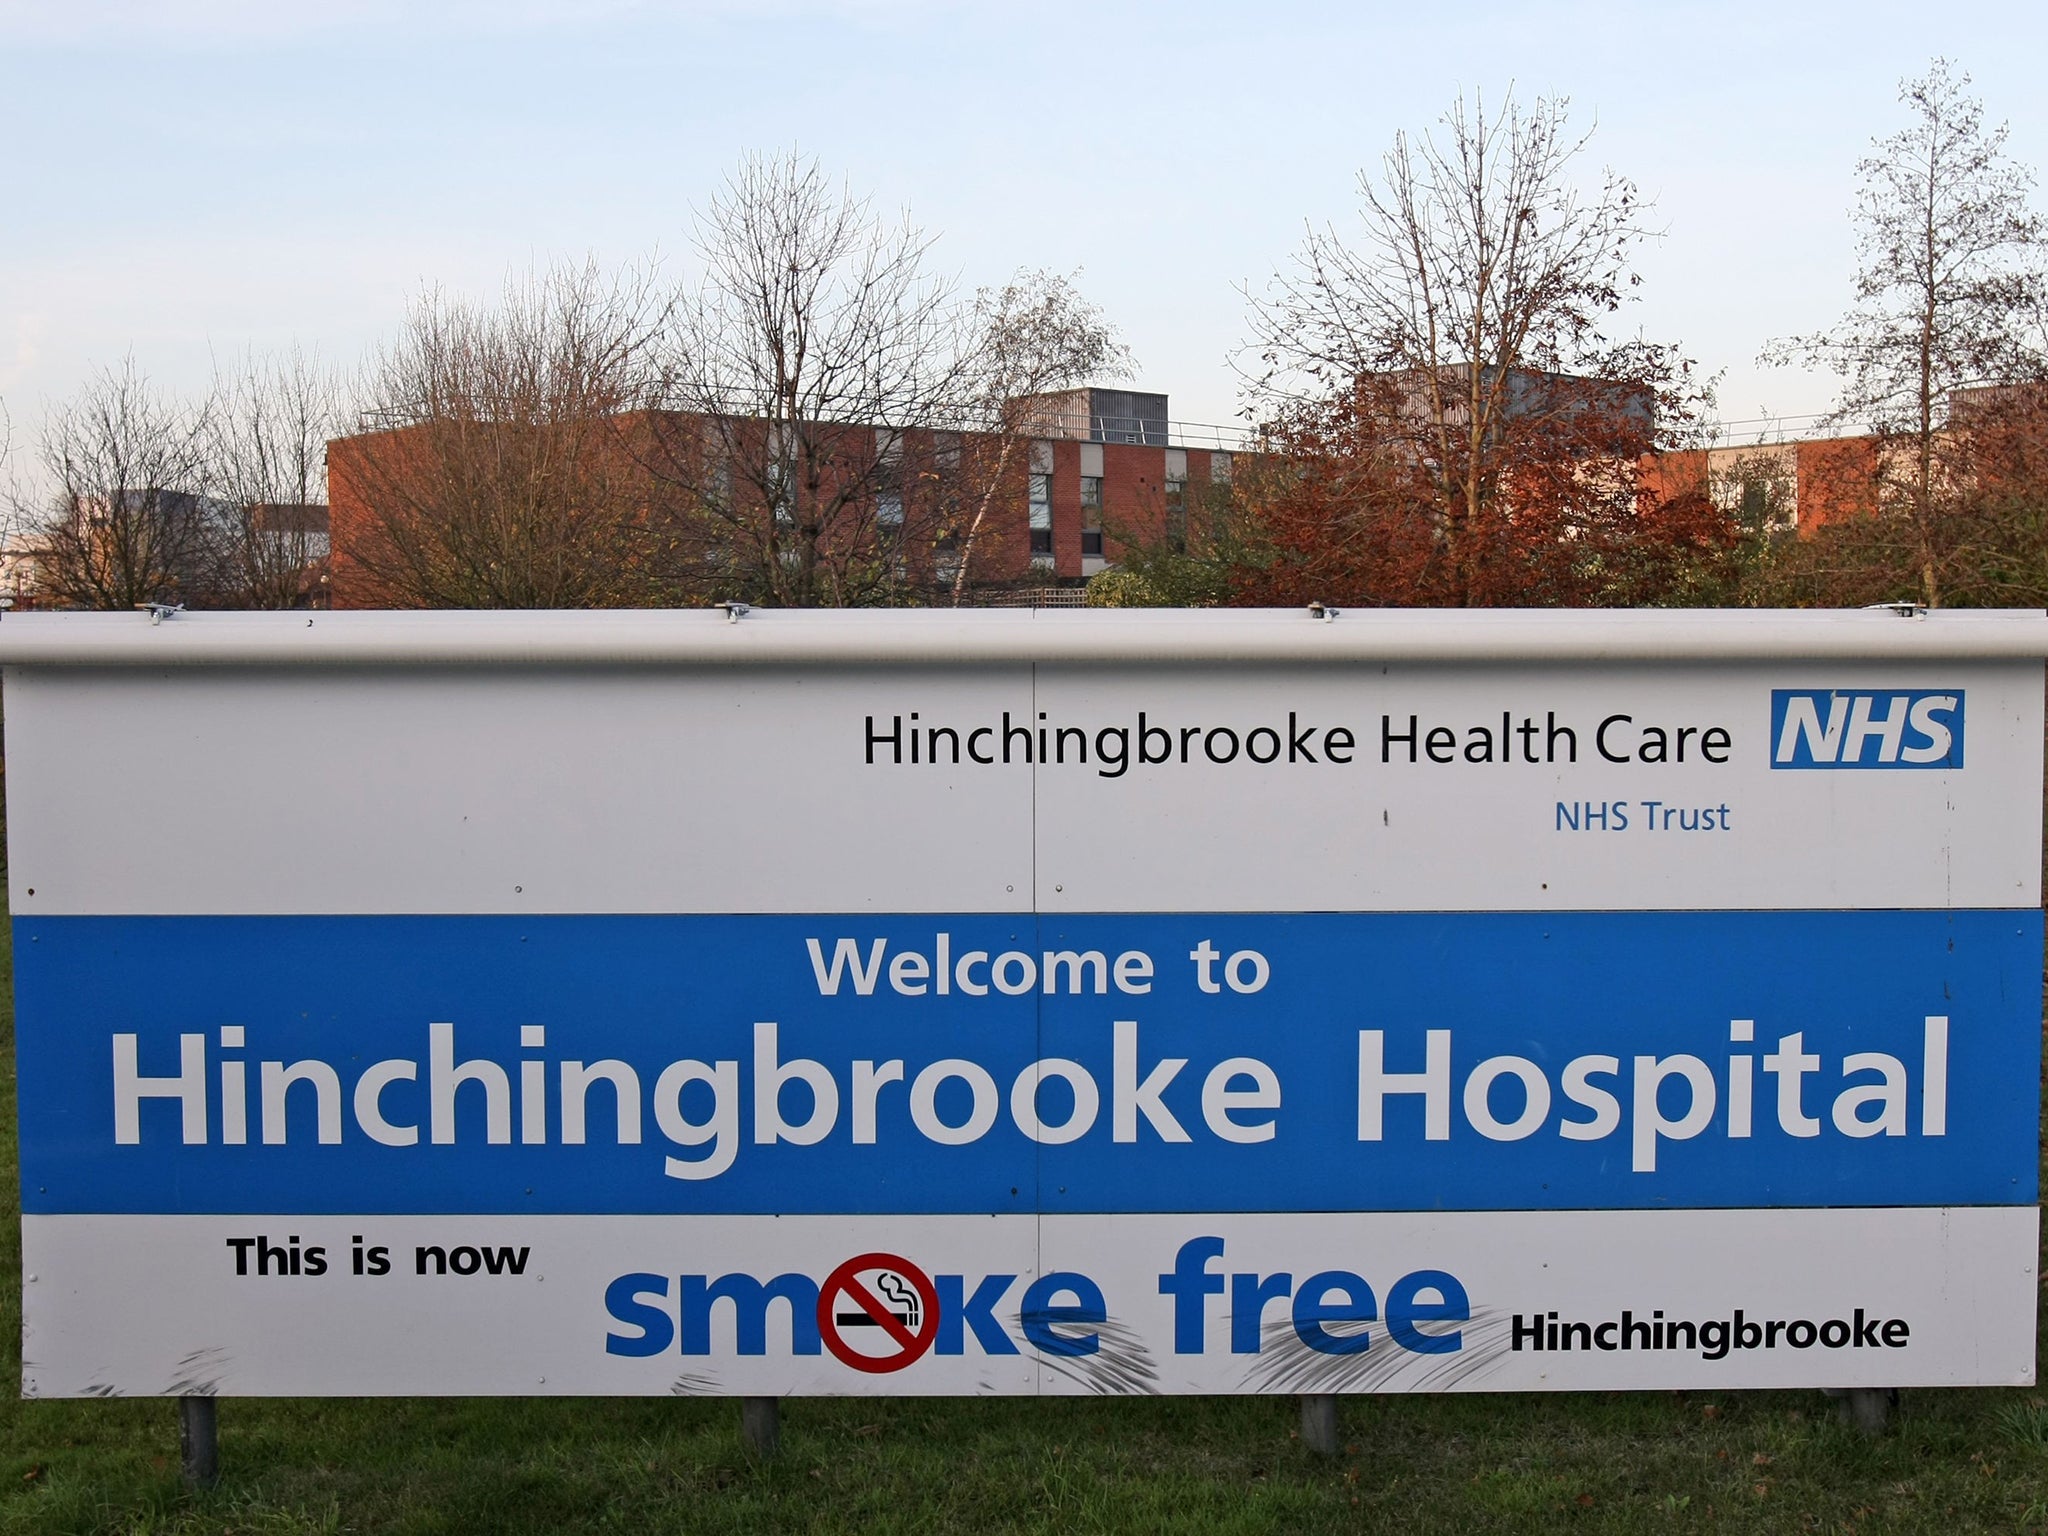 Hinchingbrooke Hospital in Huntingdon, Cambridgeshire run by Circle